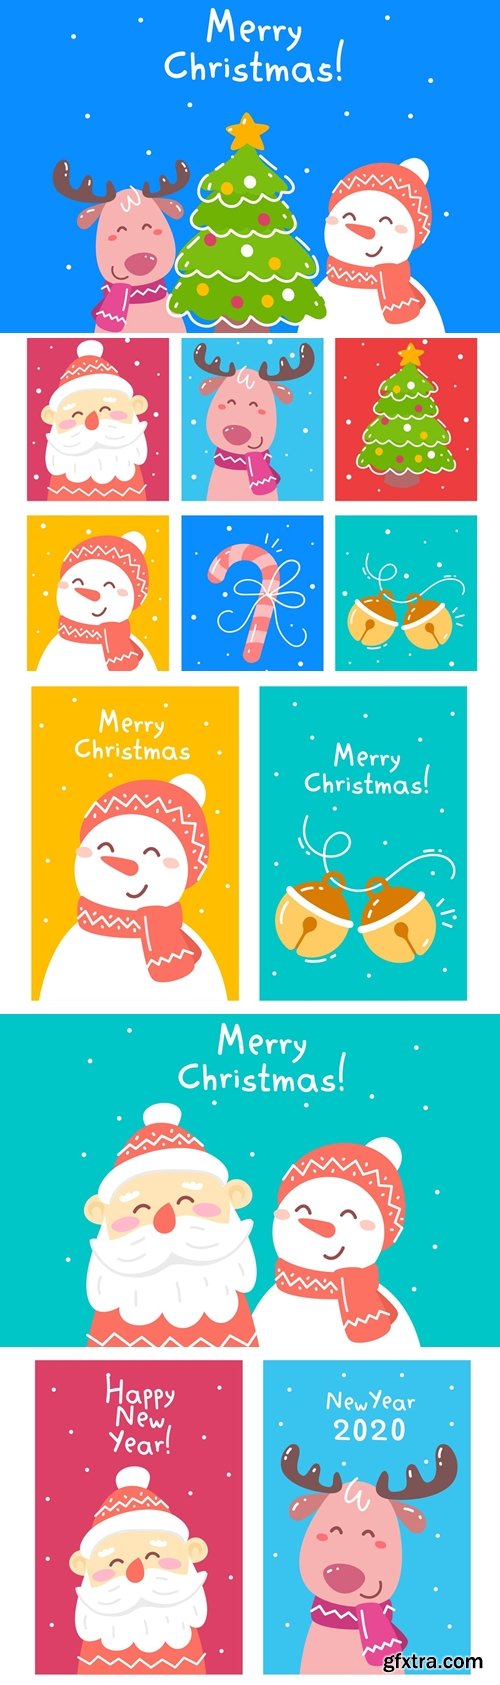 Set of Christmas card illustrations